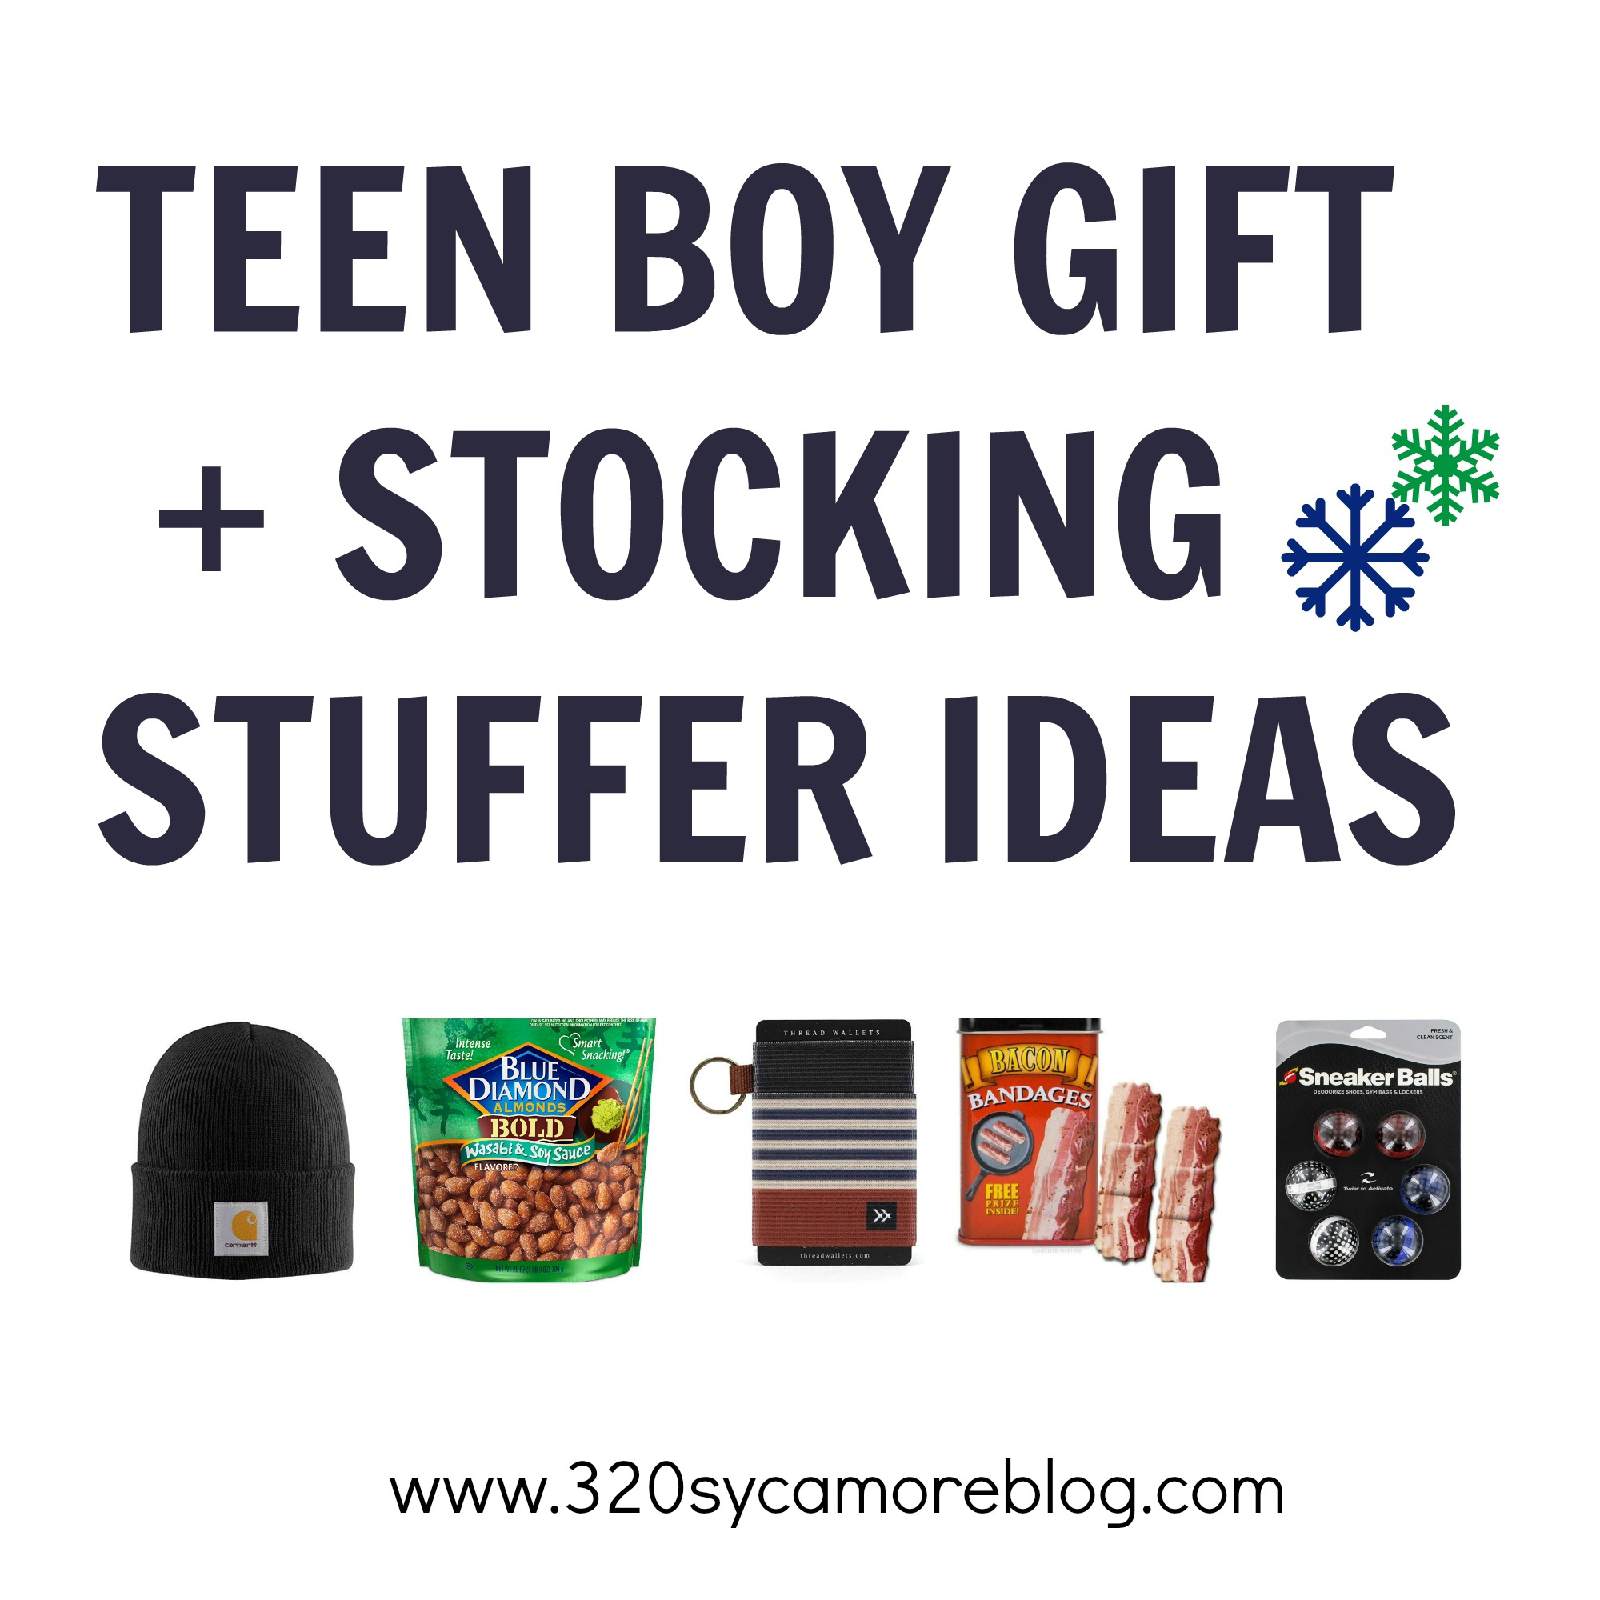 10 Under $10: Stocking Stuffers for Teenage Boys